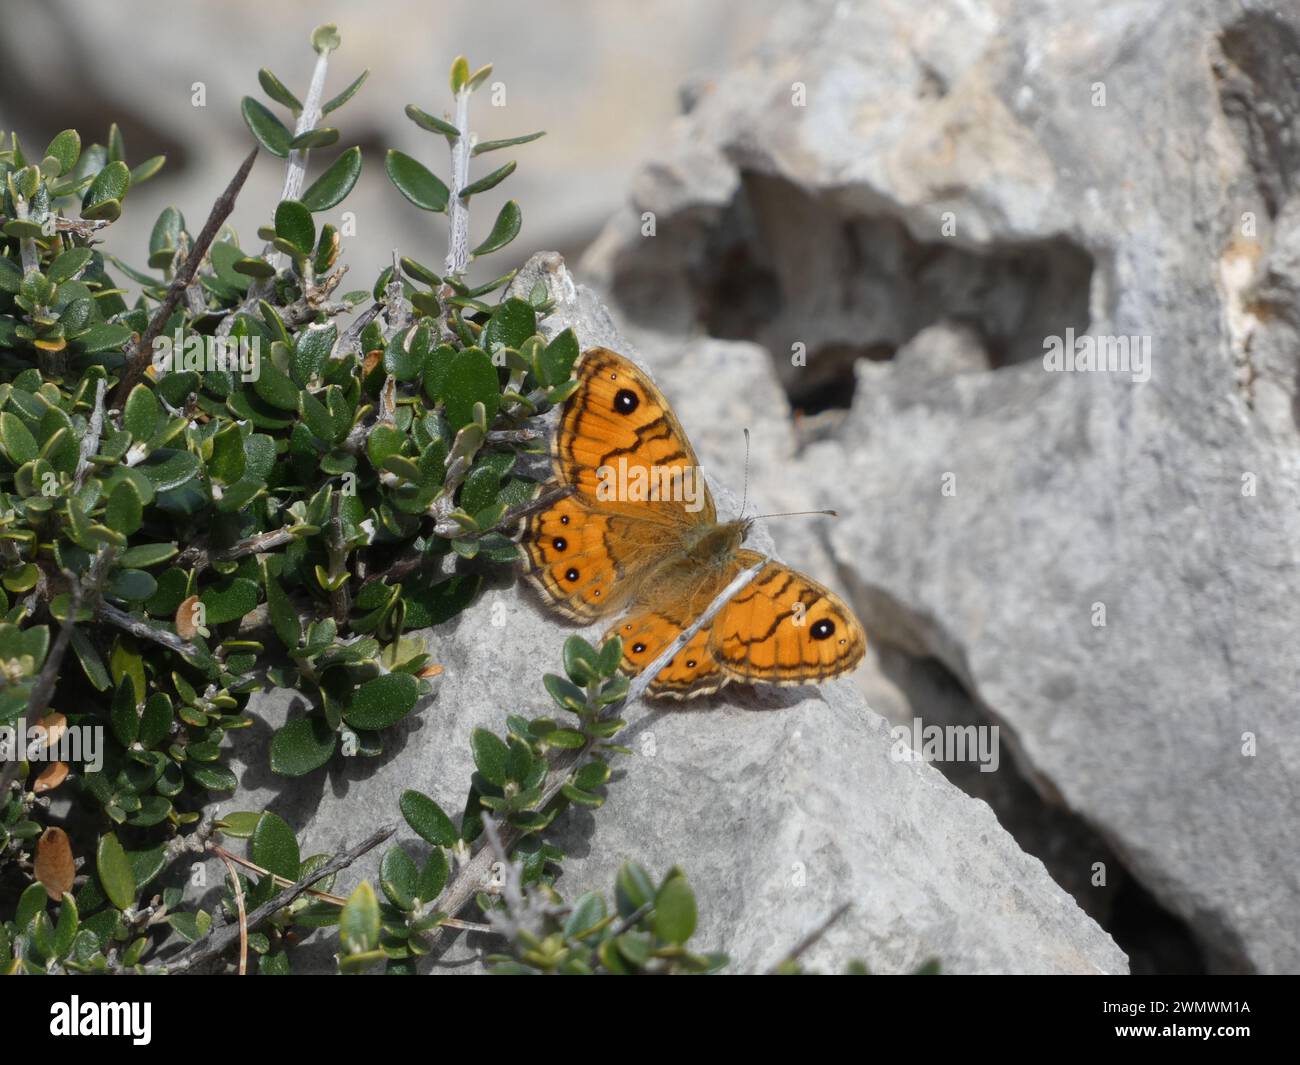 A Brown-eye vixen (Lasiommata megera) butterfly resting on a stone near bushes in Mallorca Stock Photo